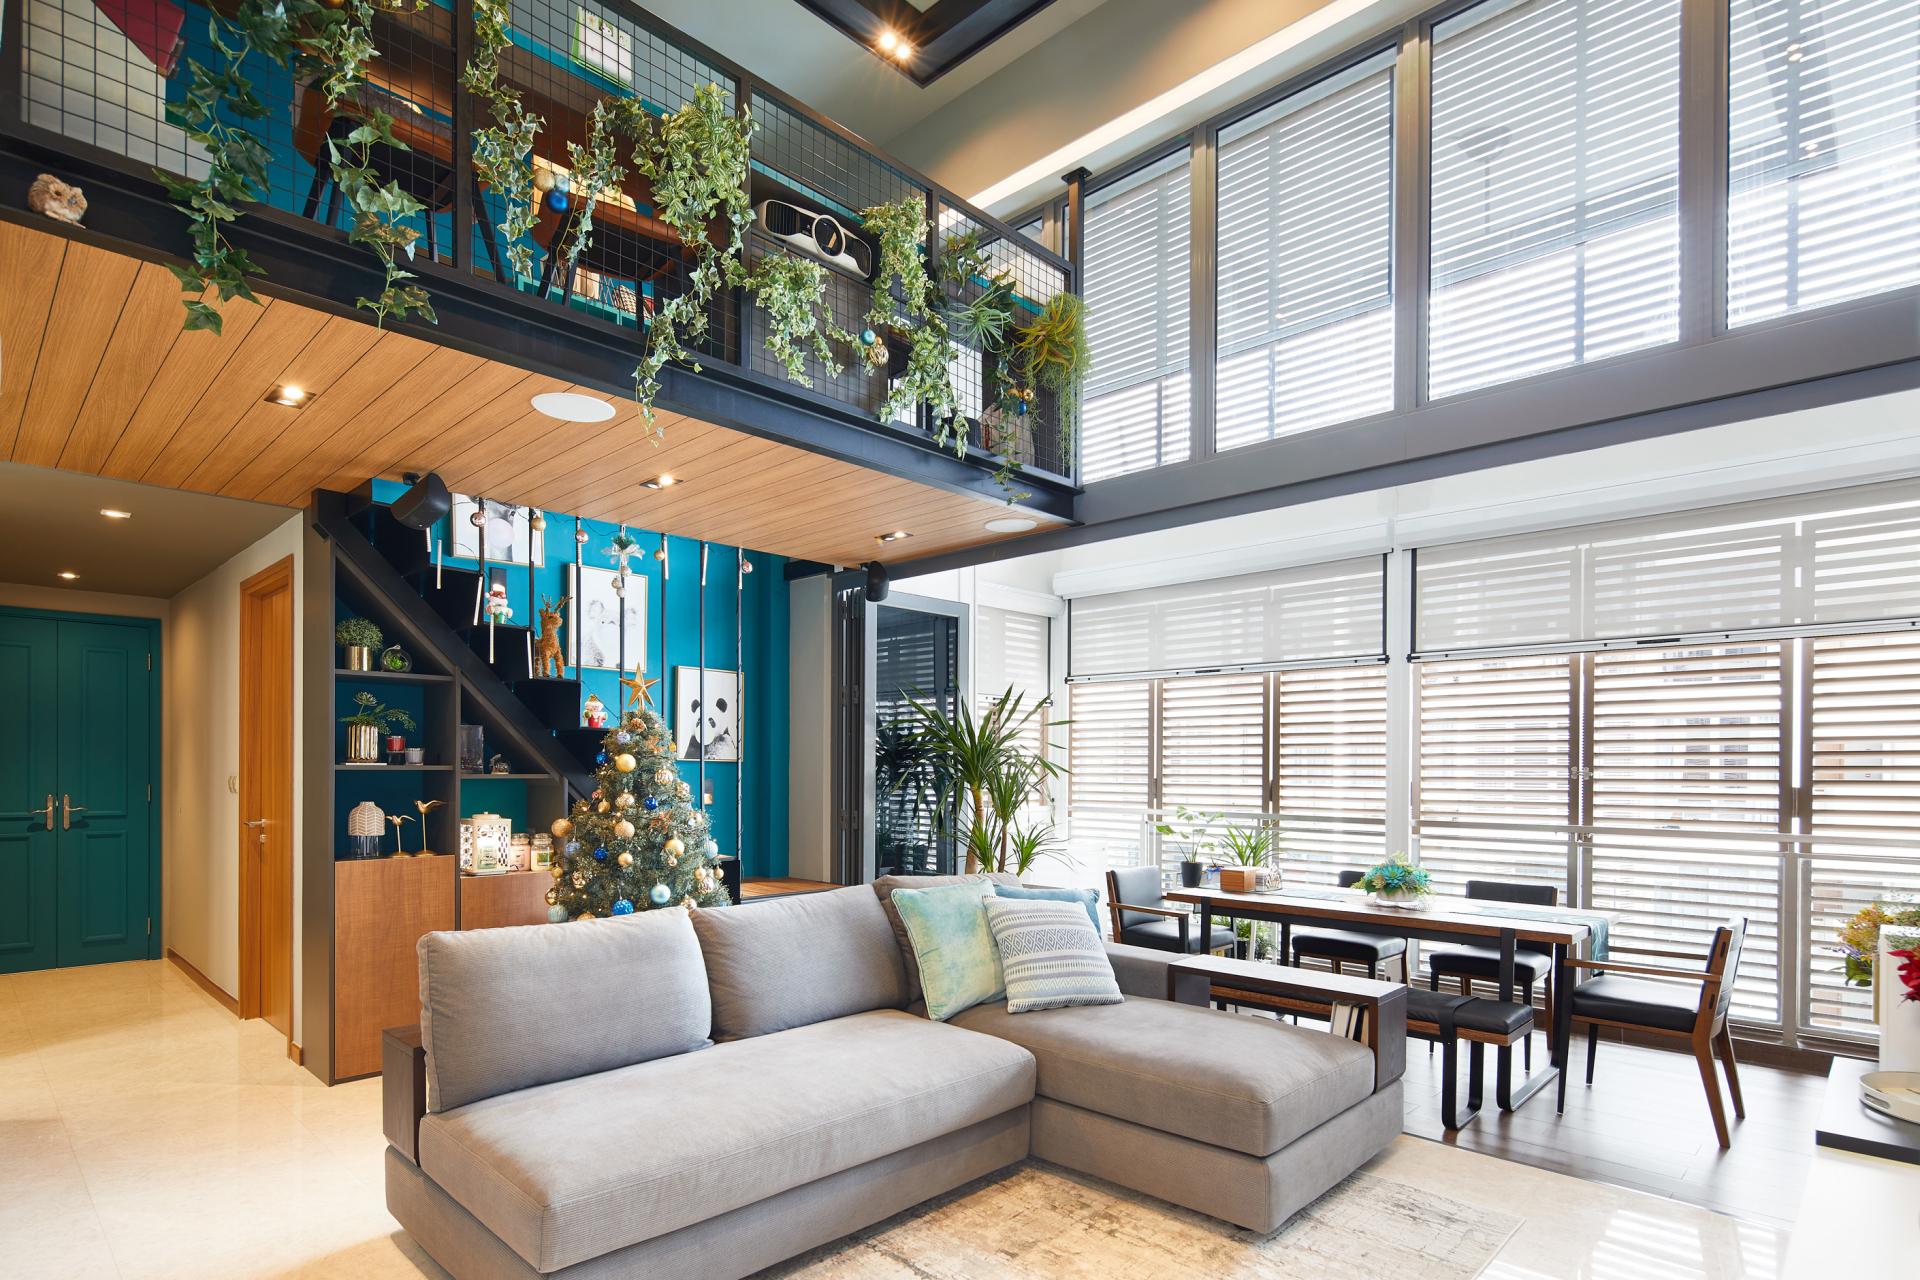 Step Inside this Mod-Industrial Loft with an Eden Garden Concept